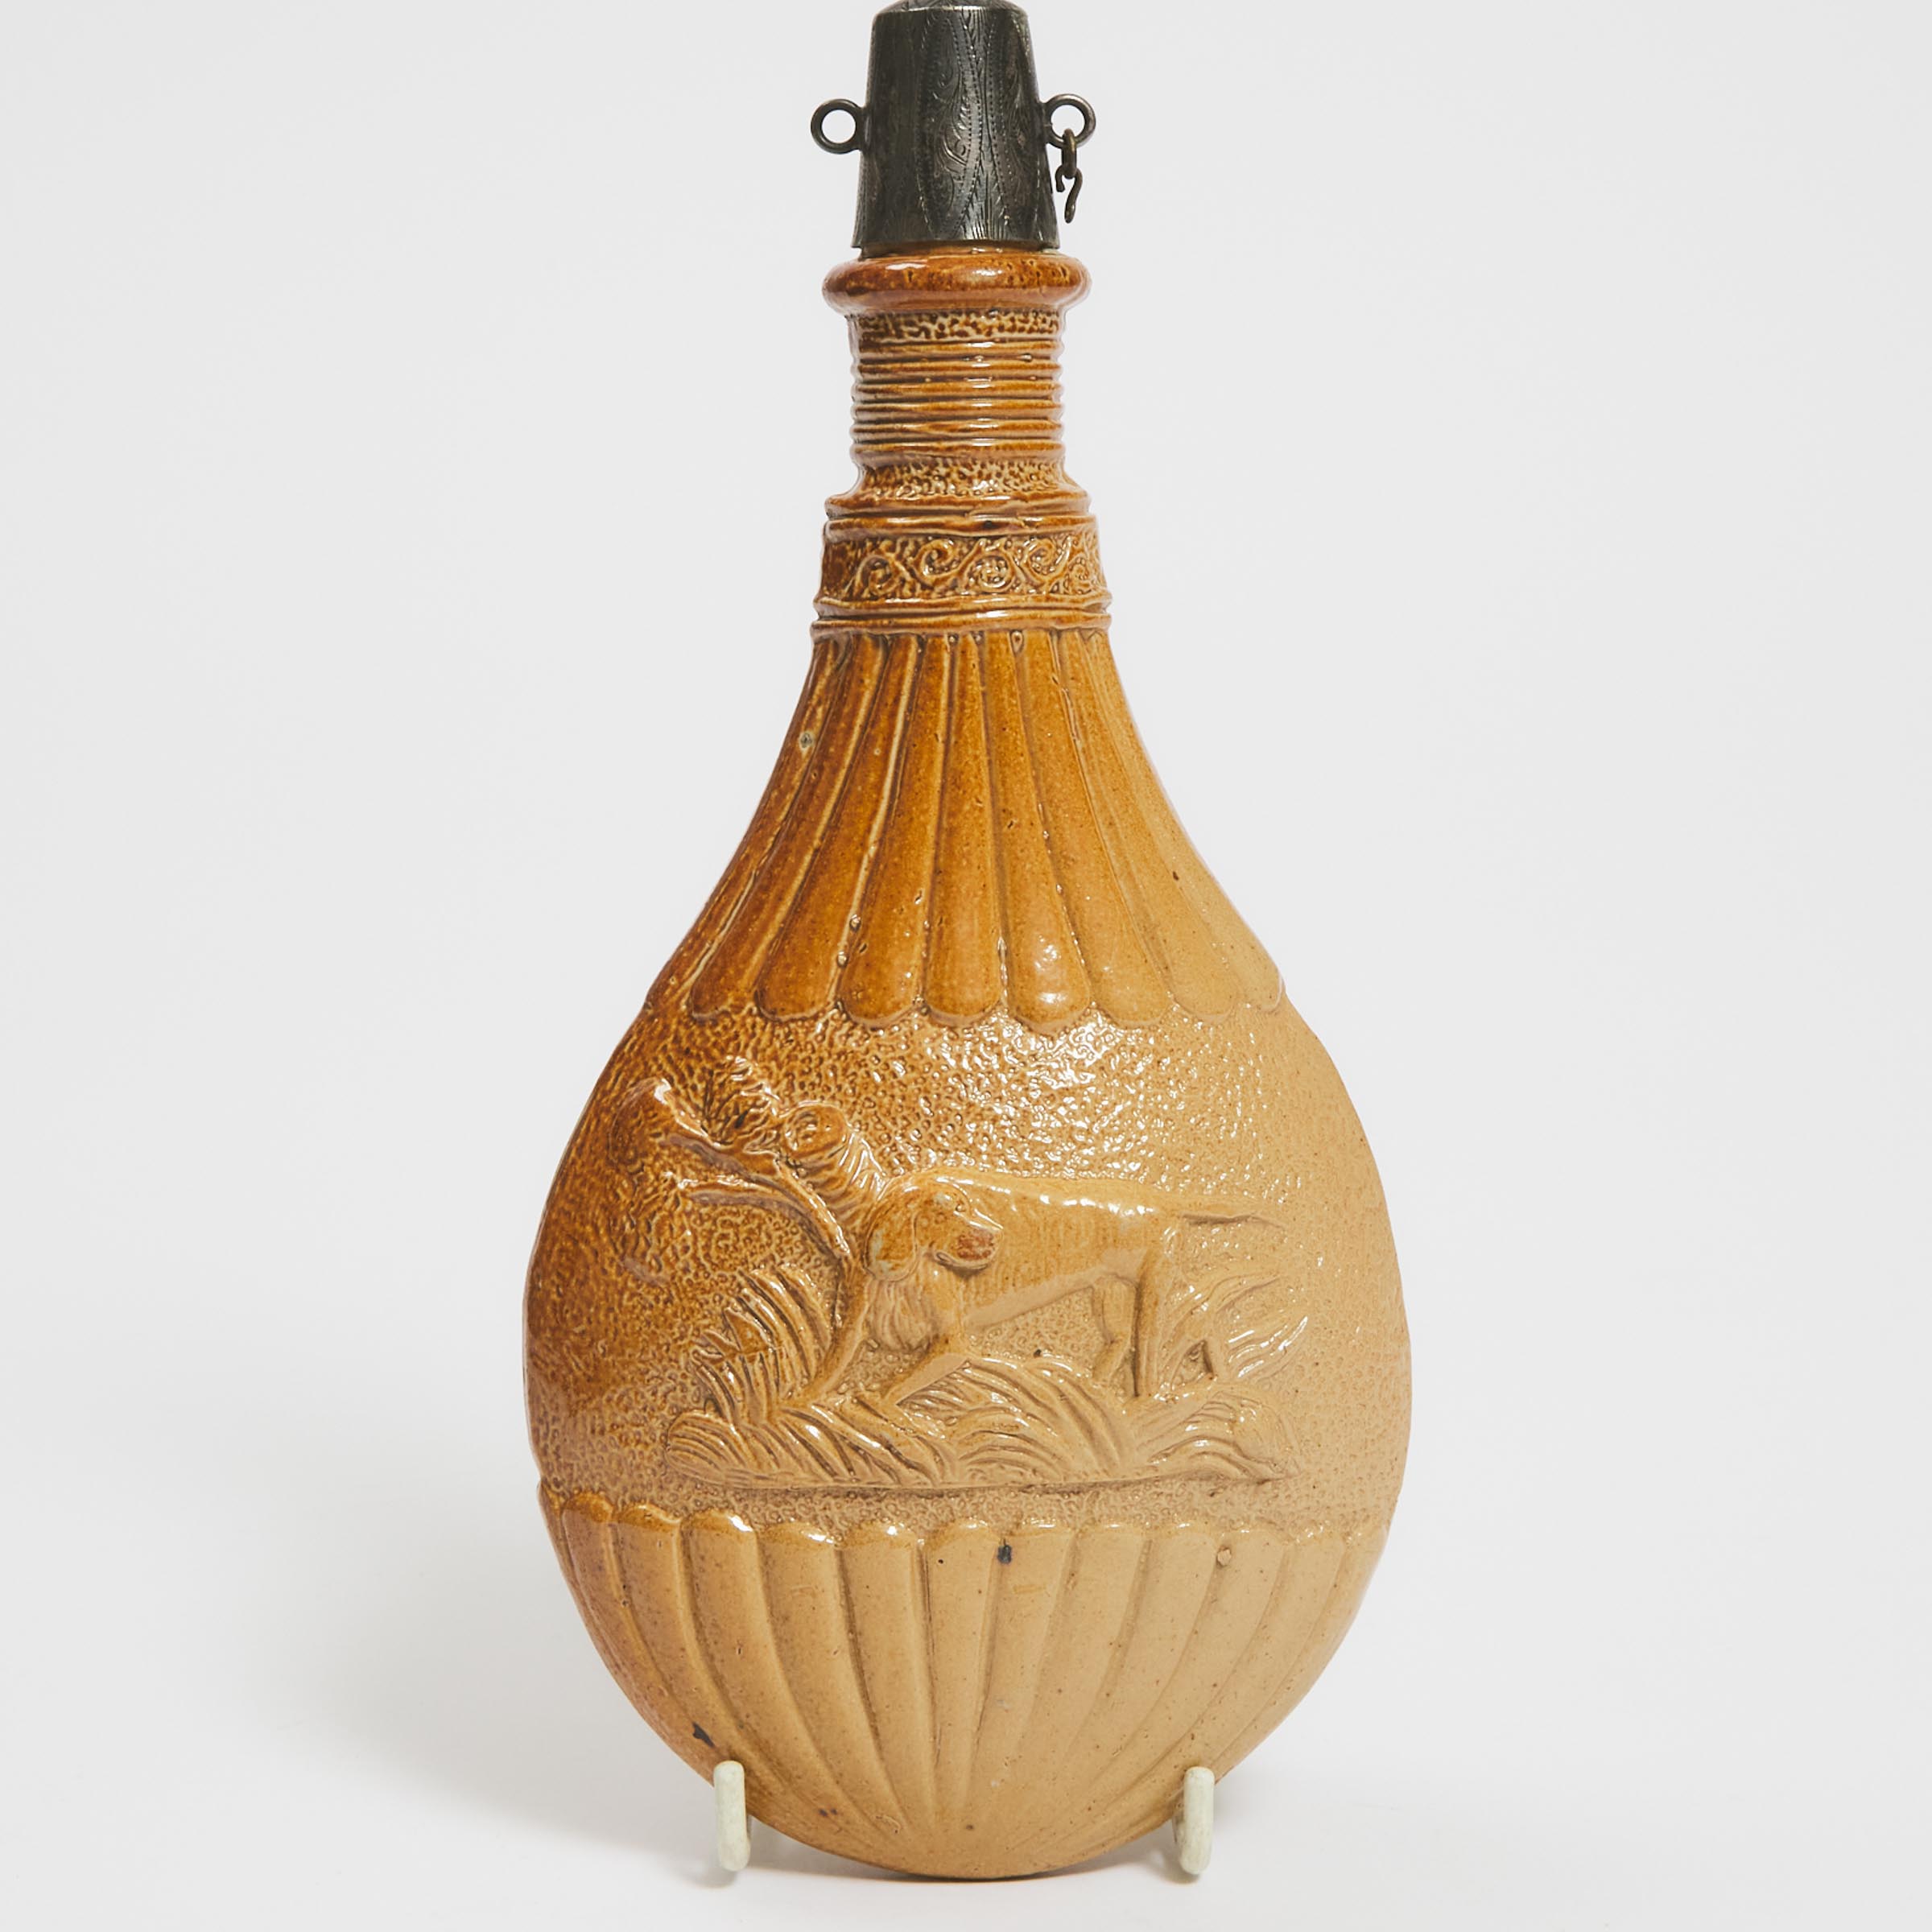 Stephen Green Lambeth Stoneware Spirit Flask, c.1850